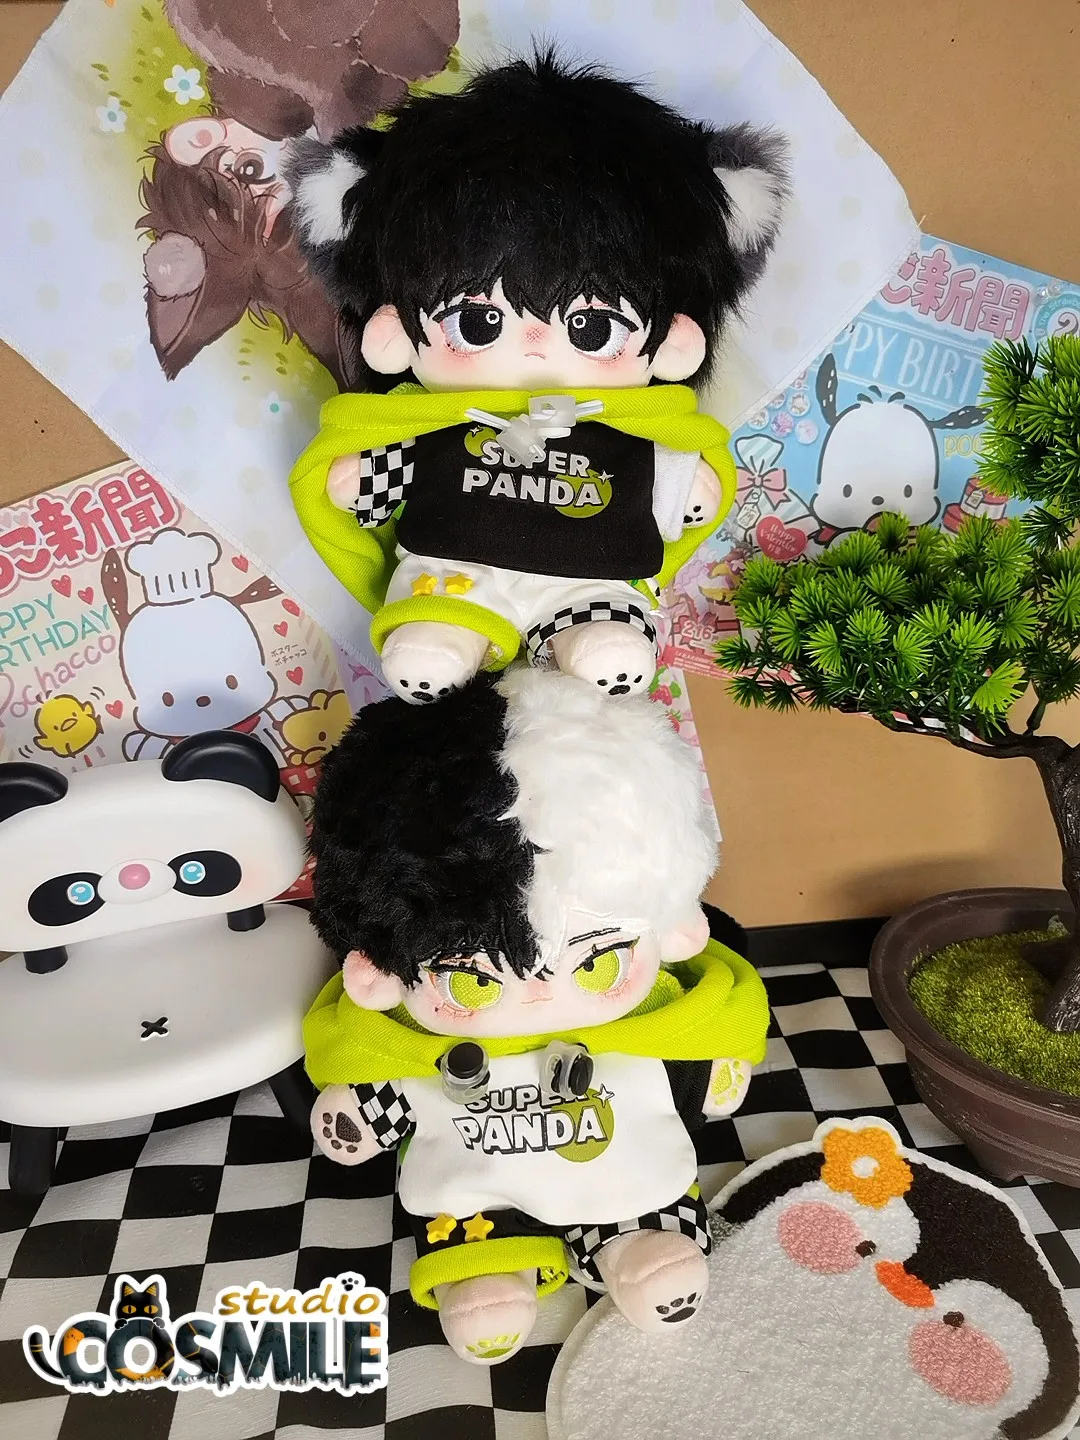 

No attributes Kpop Star Idol Super Panda Green Hooded Suit Stuffed Plushie 20cm Plush Toy Doll Clothes Clothing YM